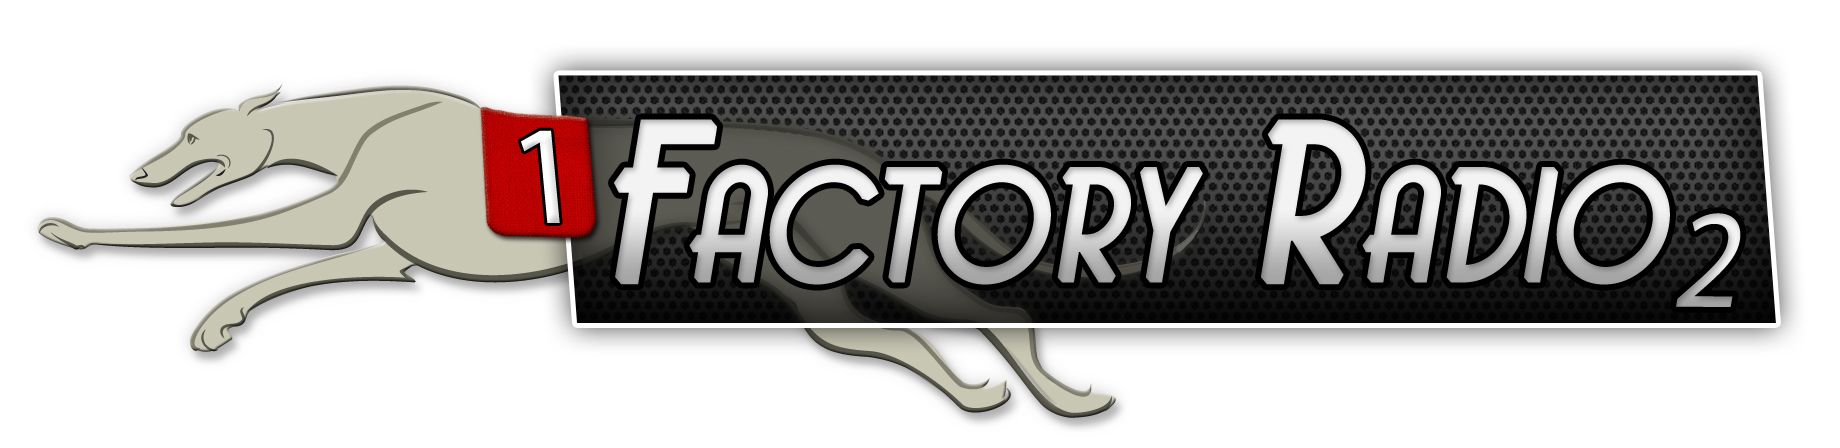 1factoryradio2 Logo photo LogoEbay2-1FR2_zps35d68aa4.jpg